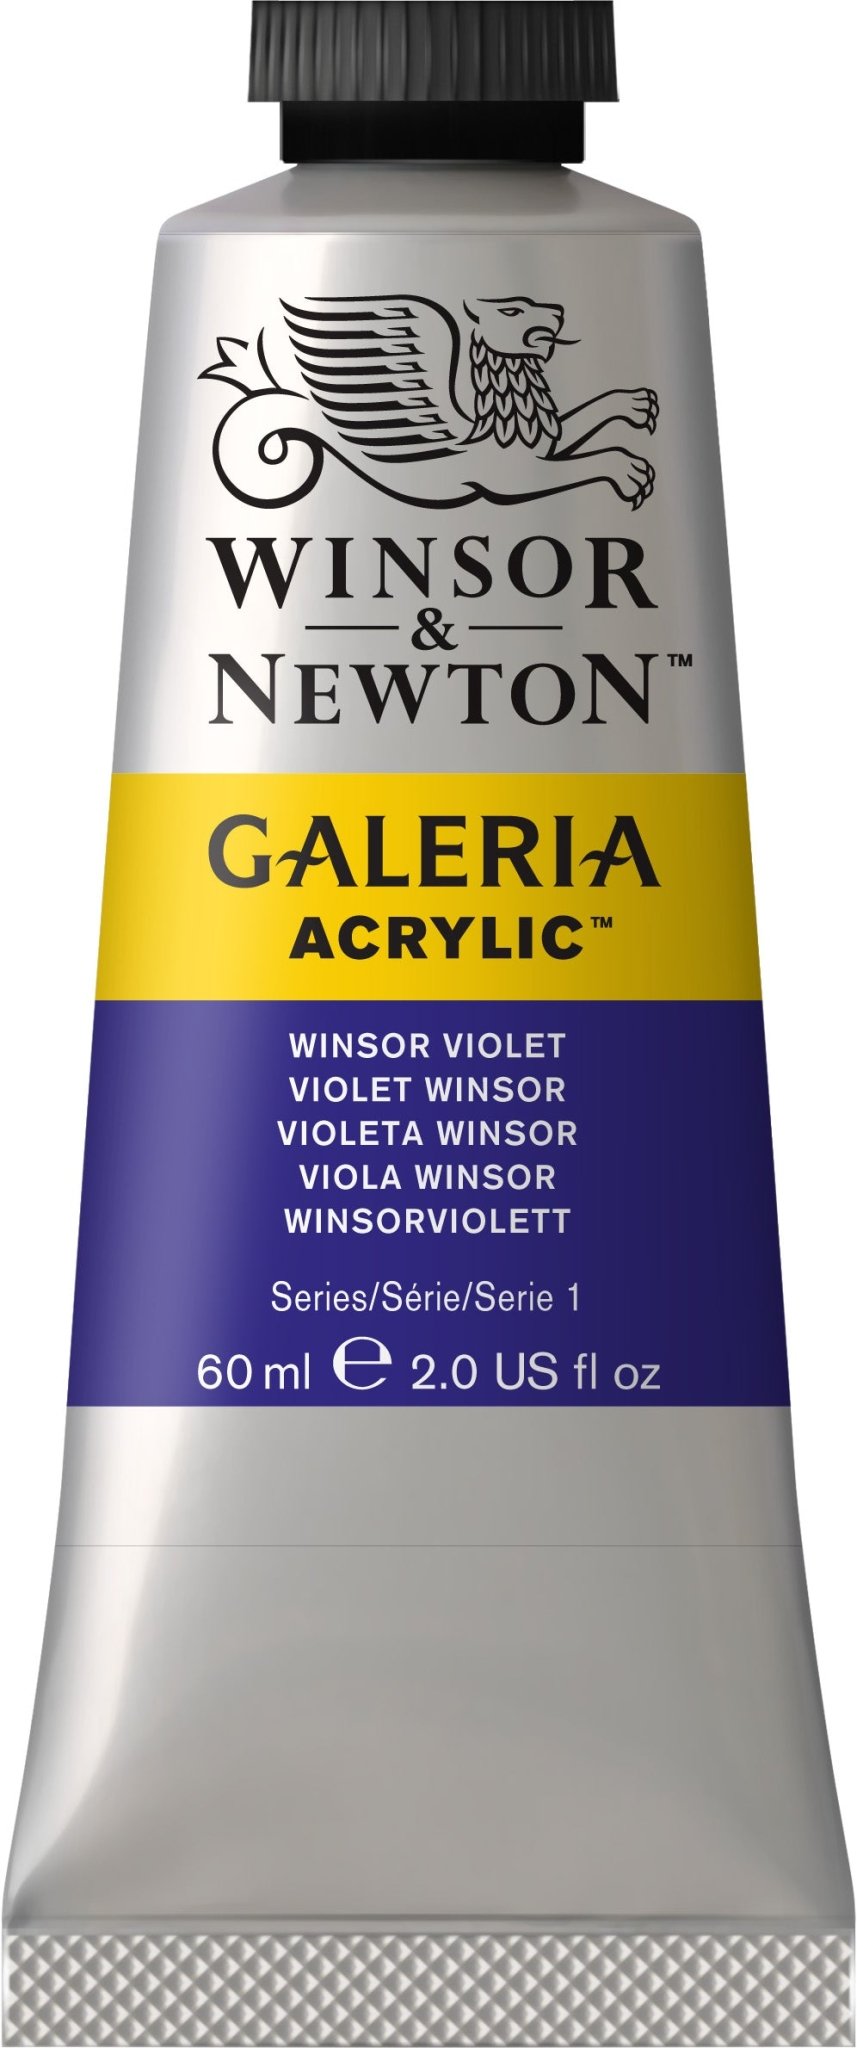 W & N Galeria Acrylic 60ml Winsor Violet - theartshop.com.au